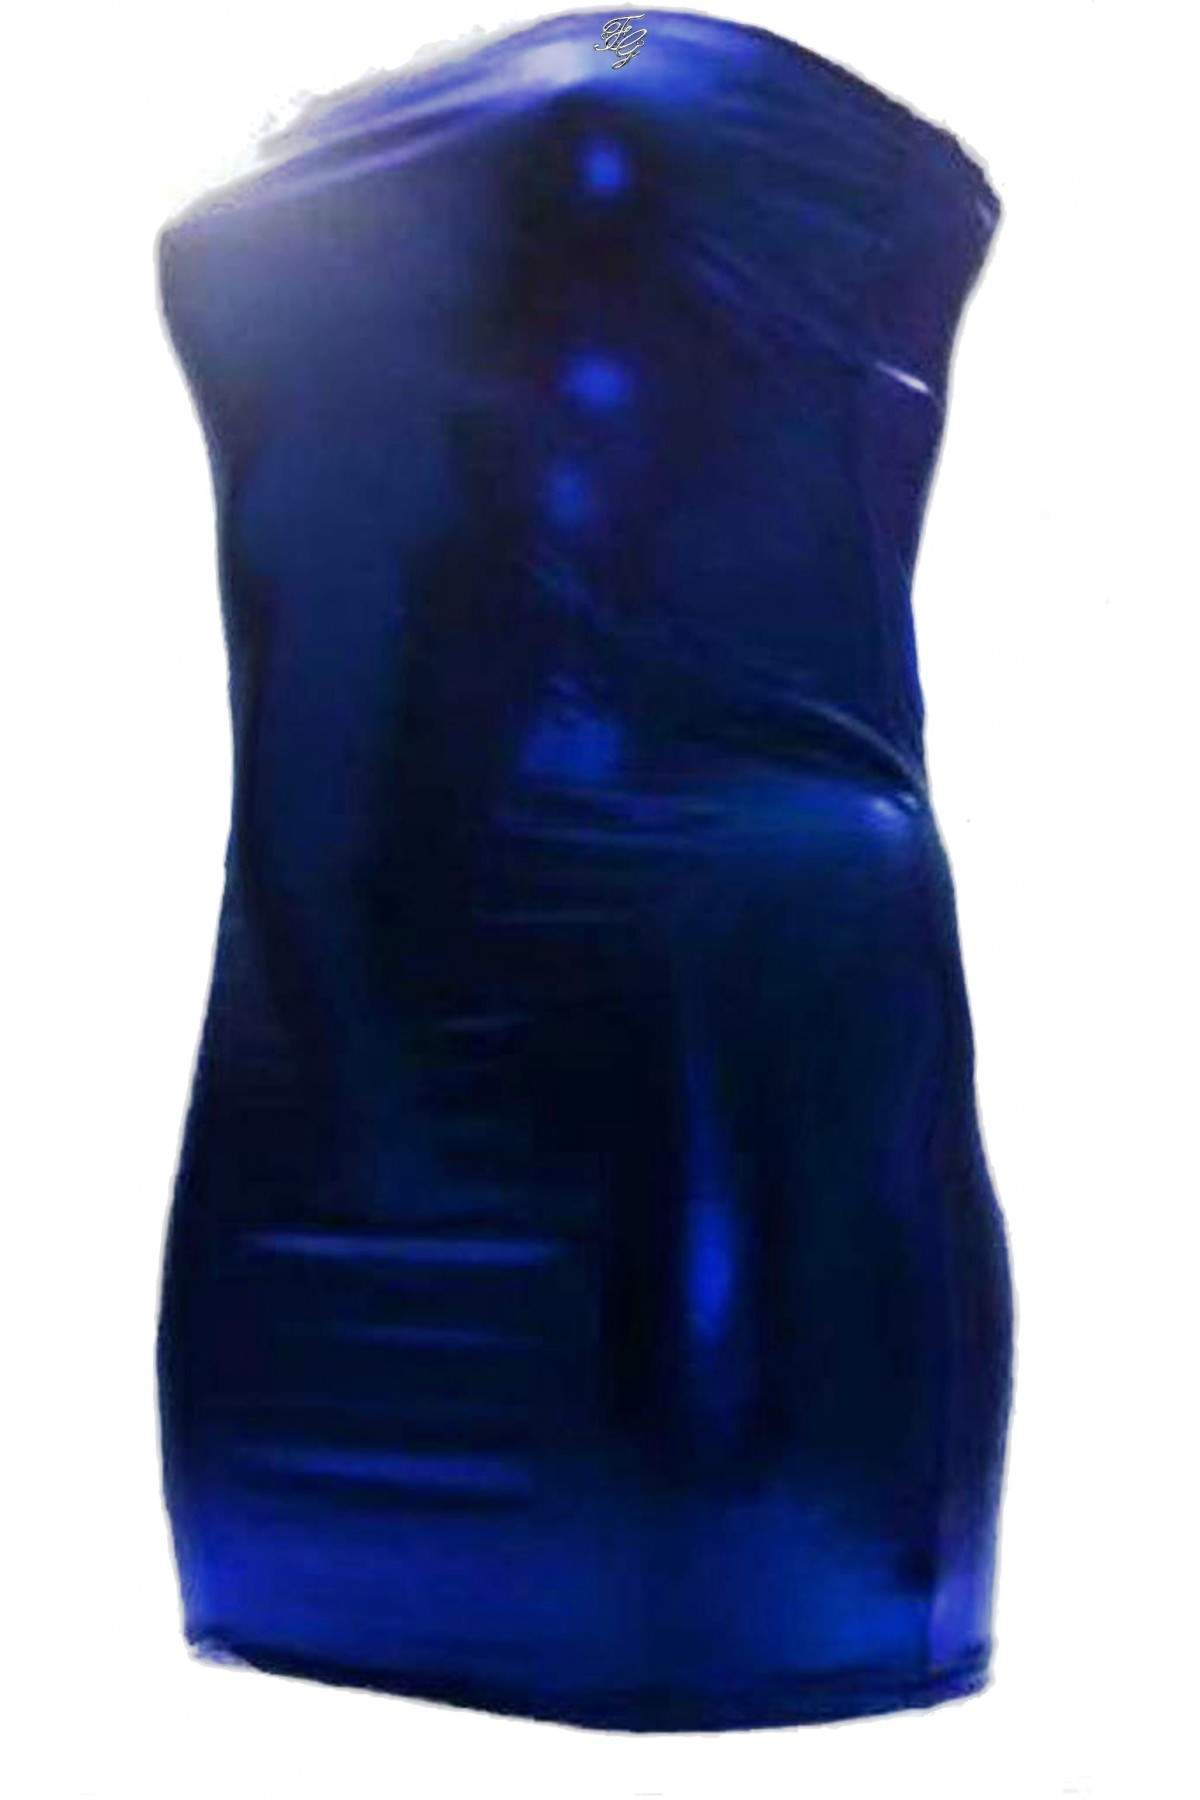 Gogo Wetlook Bandeau Dress Blue Sizes 44 - 52 lengths to 75 cm - 